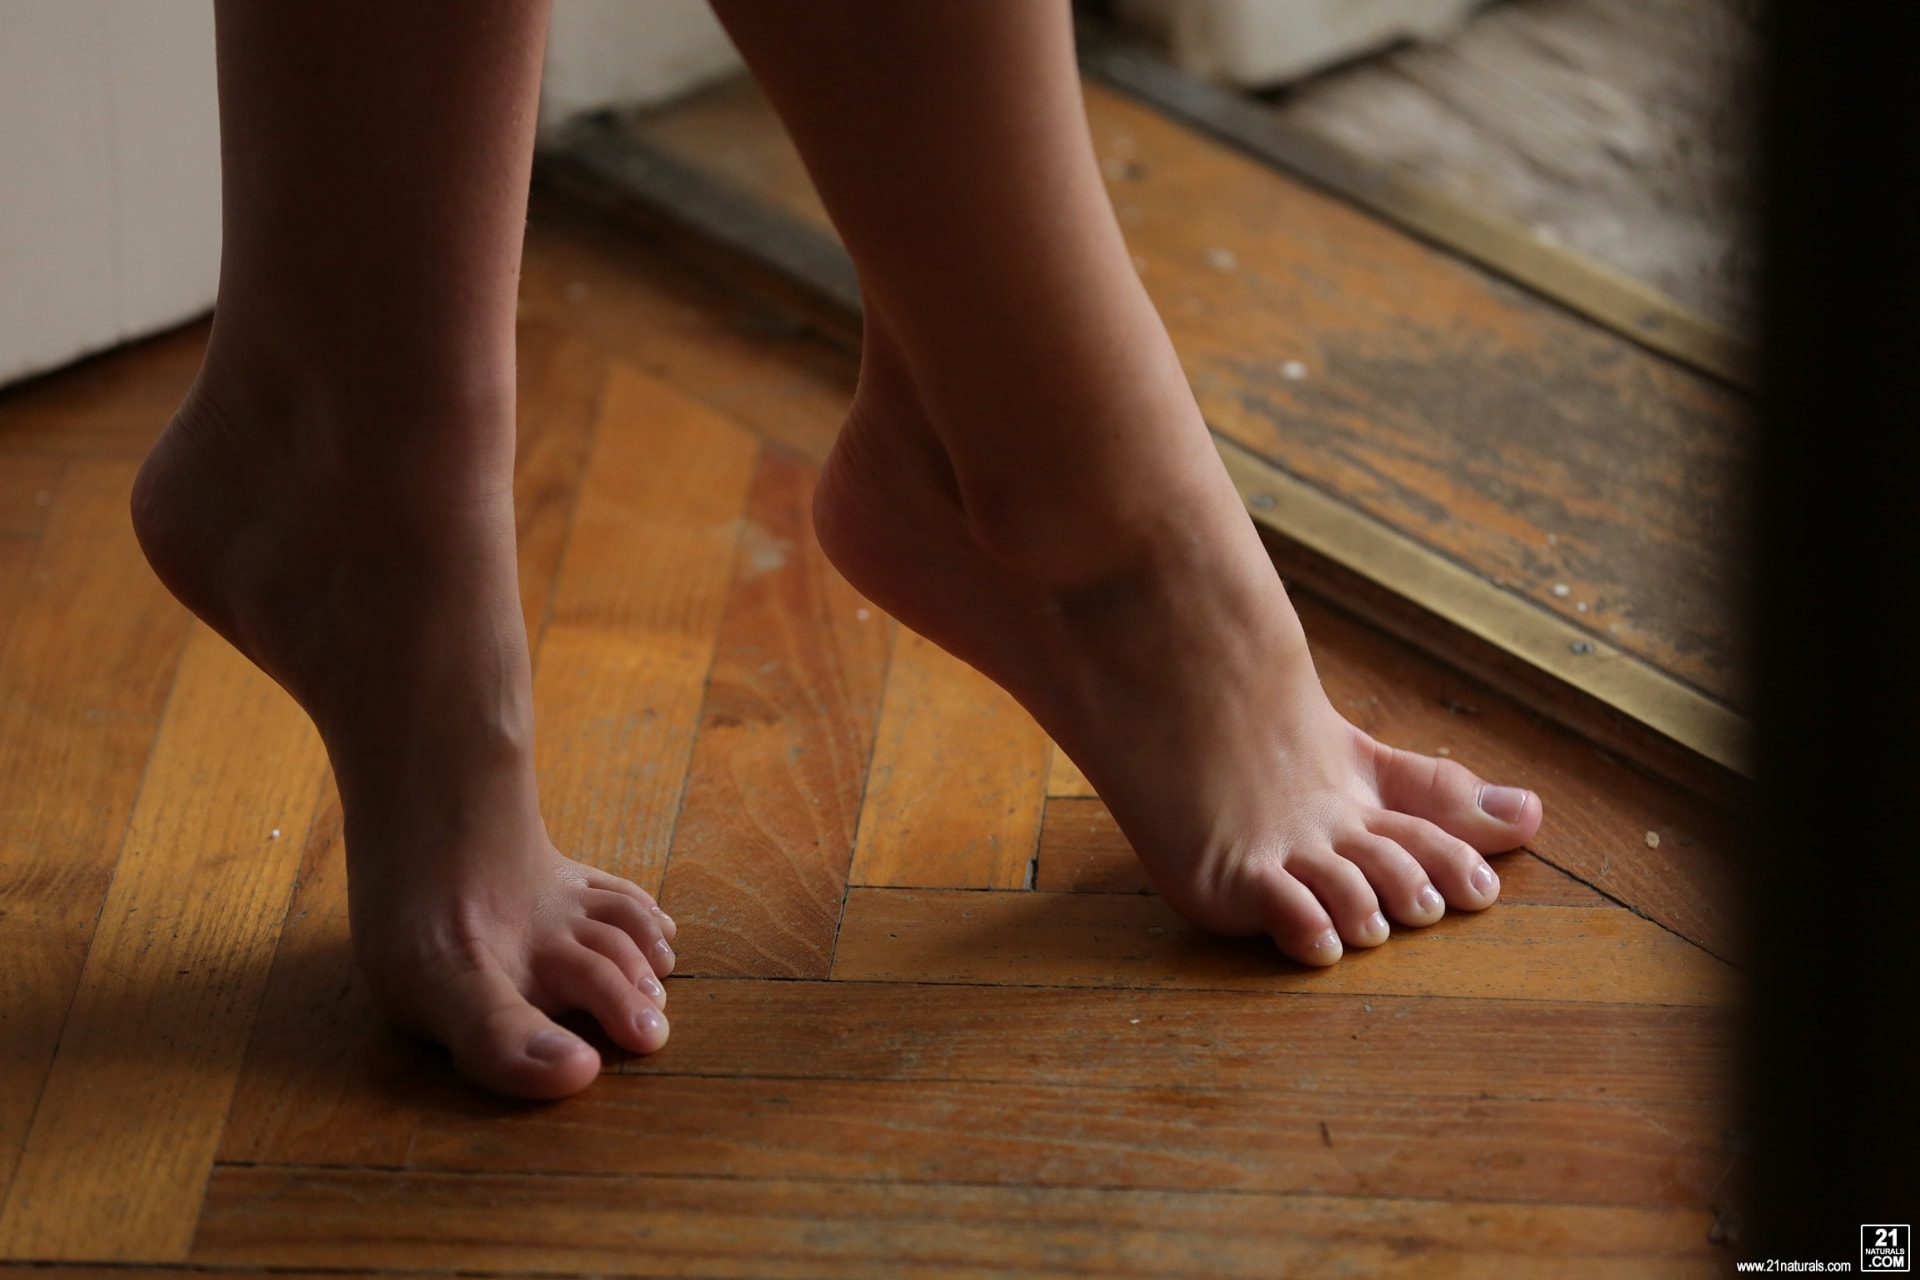 21Sextury 'On Her Toes' starring Anita Bellini (Photo 11)